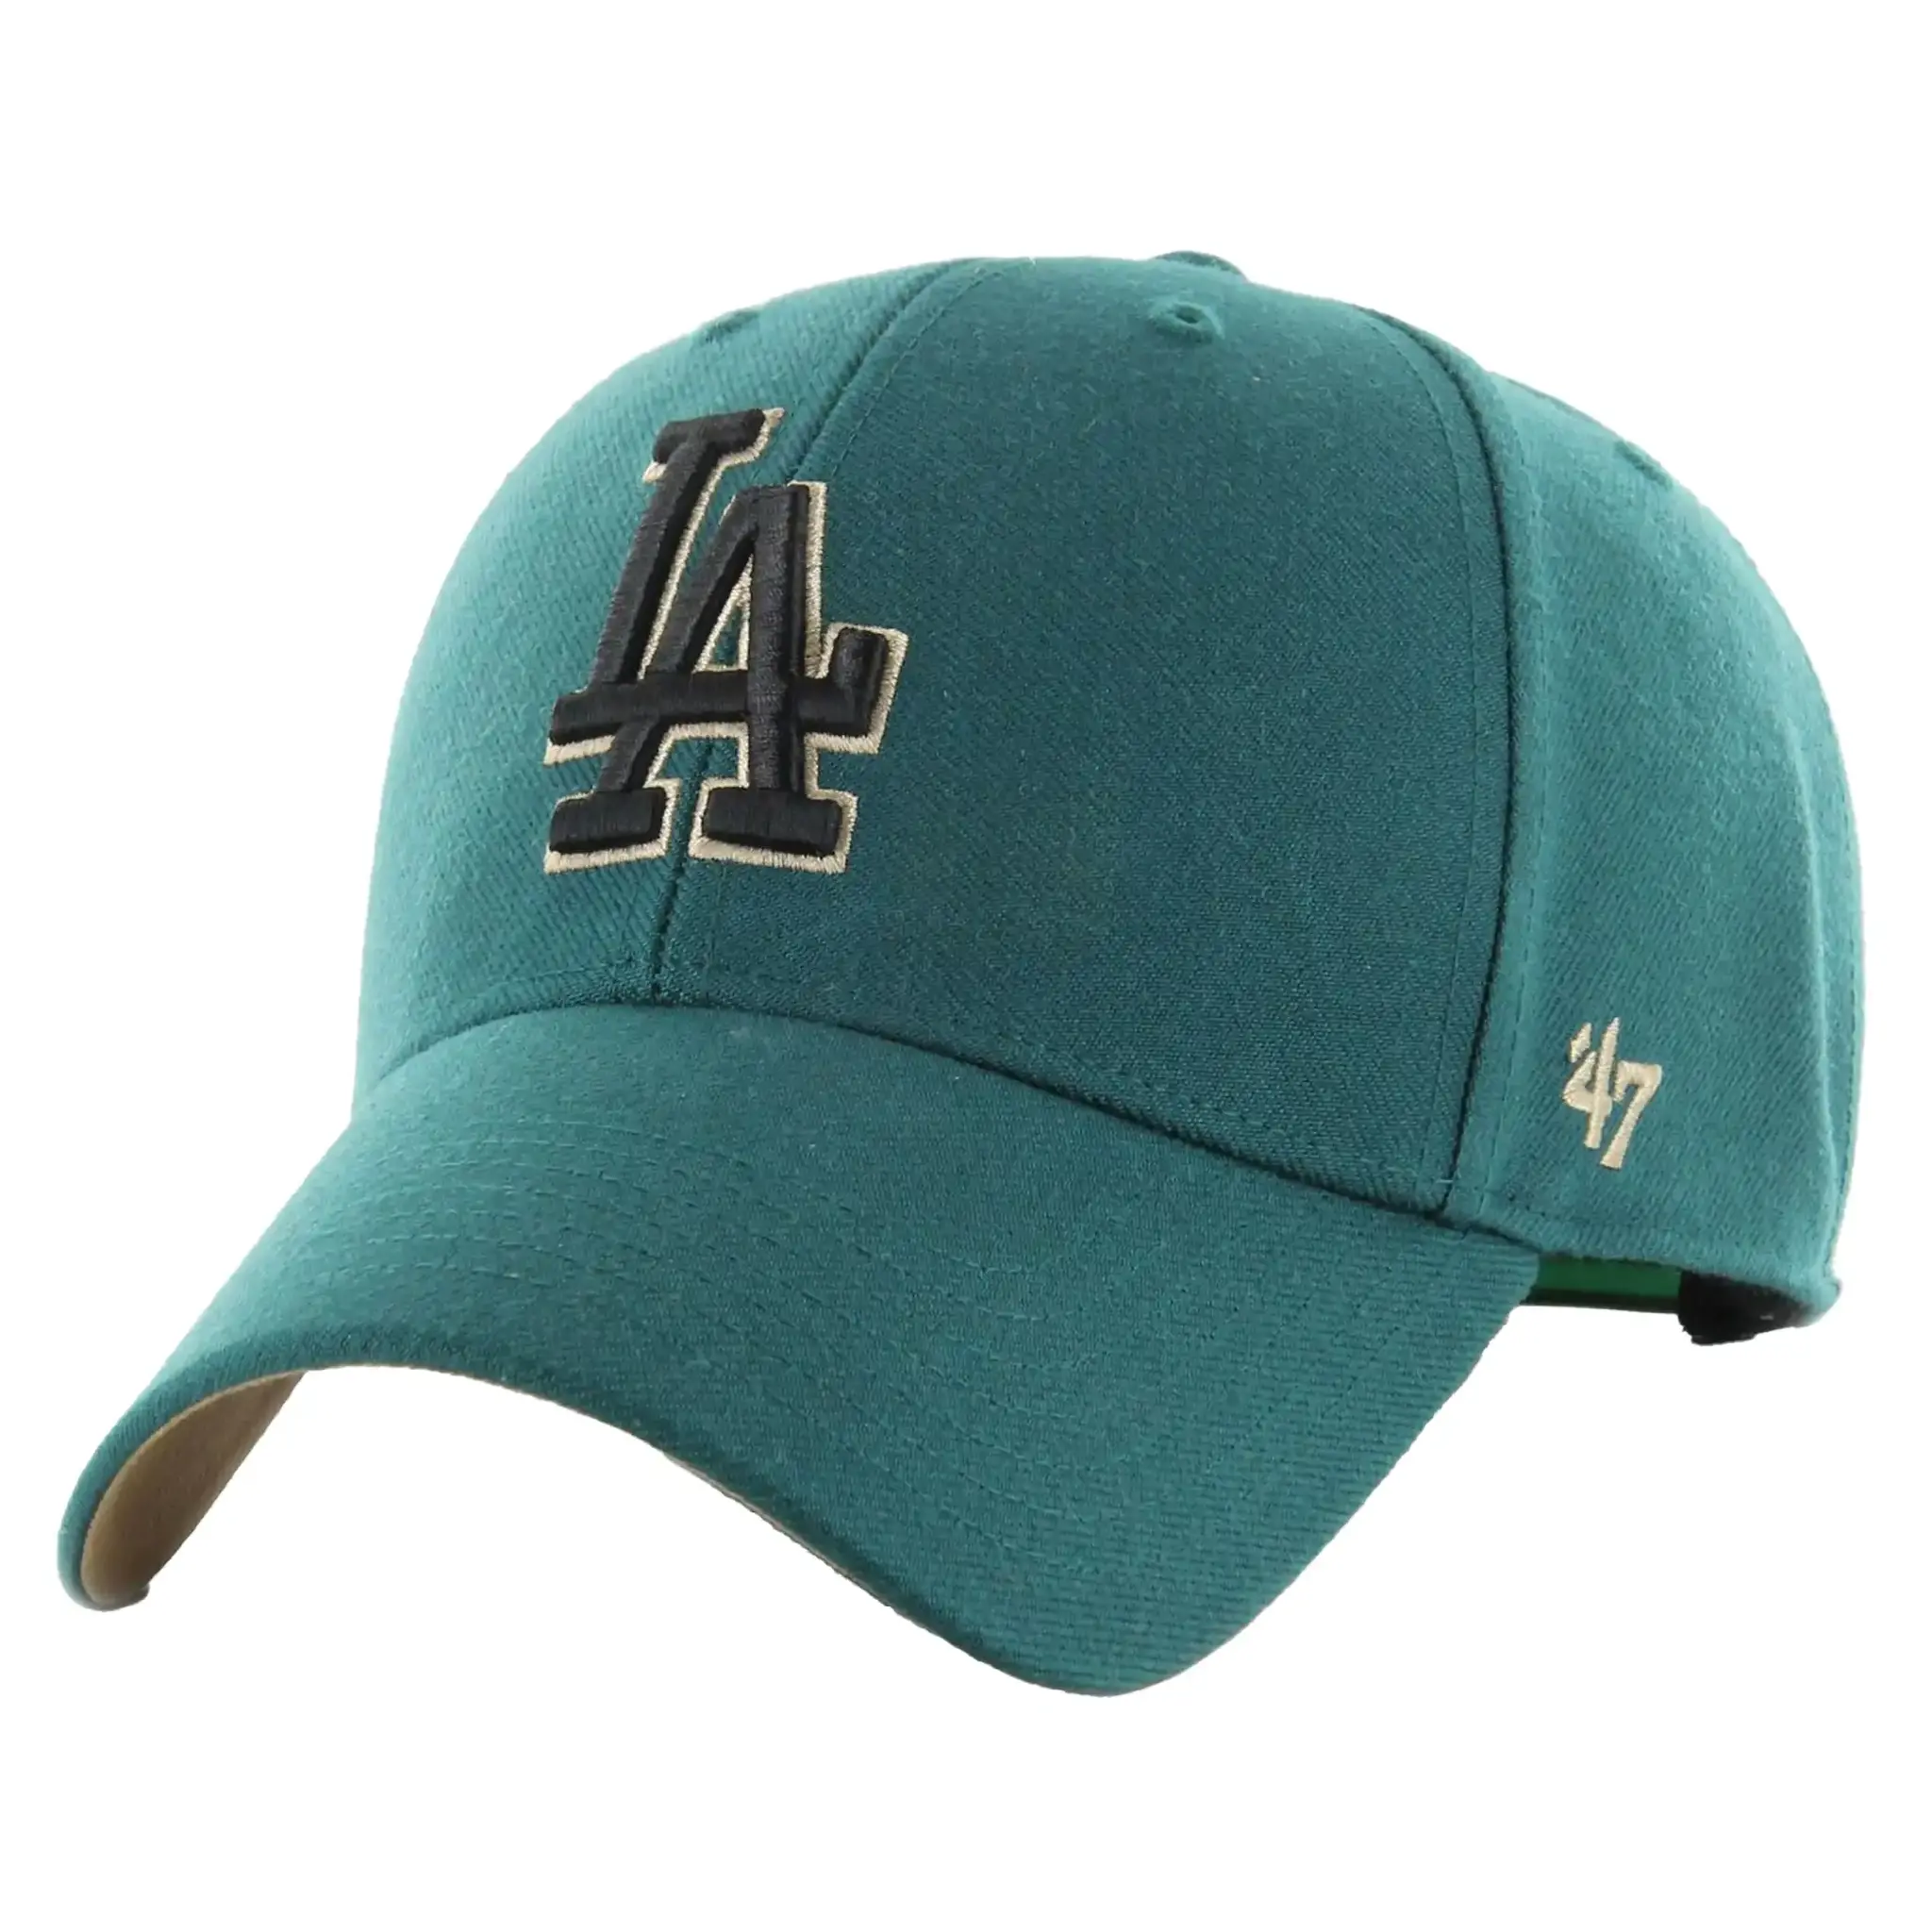 47 Brand MLB LA Dodgers bucket hat in black